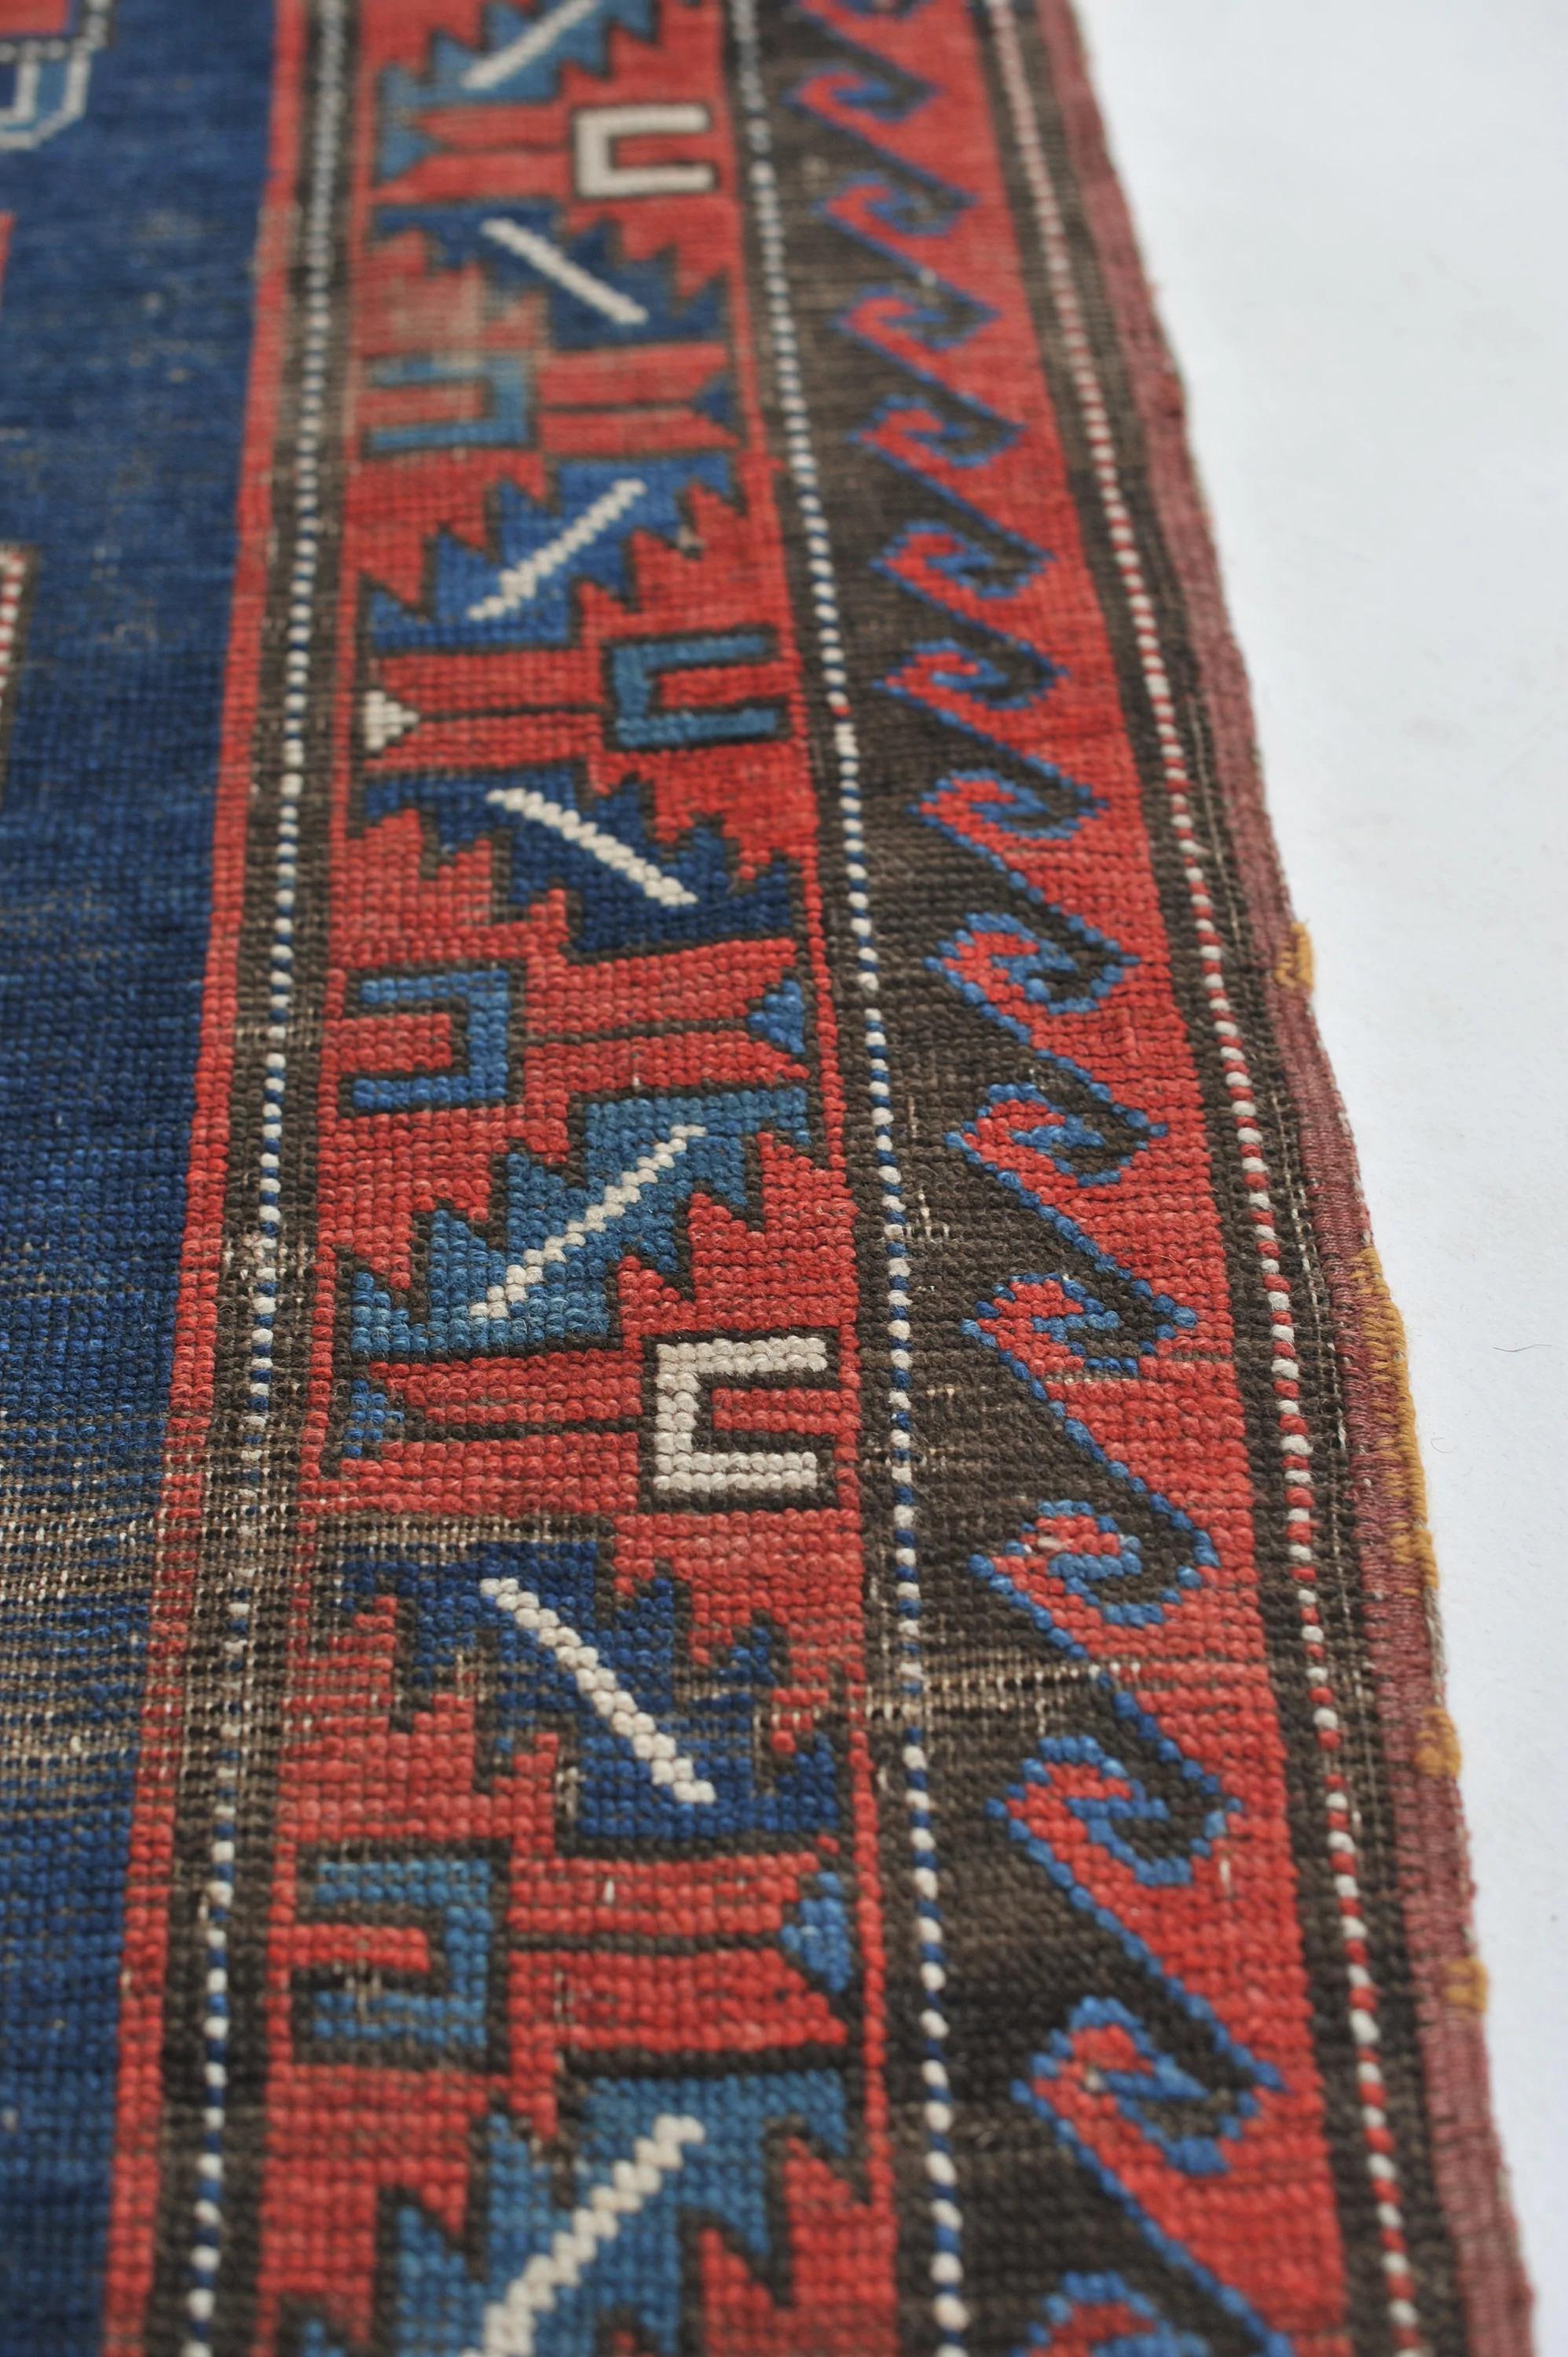 Old World Sensational Antique Caucasian Geometric Antique Kazak Tribal Rug For Sale 1